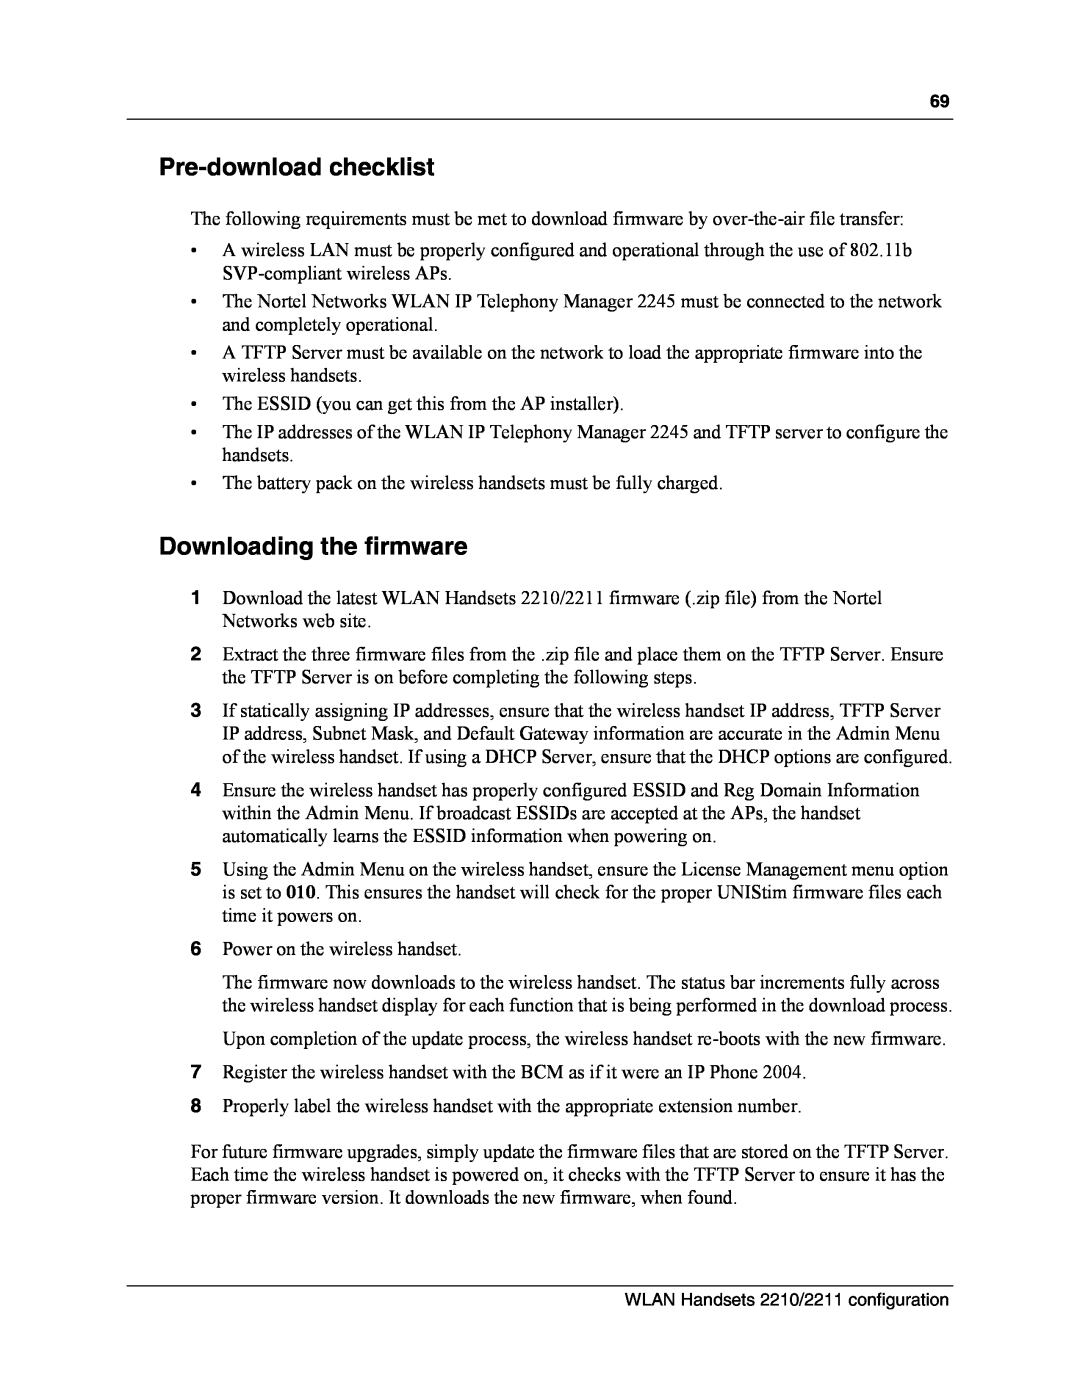 Nortel Networks MOG6xx, MOG7xx manual Pre-download checklist, Downloading the firmware 